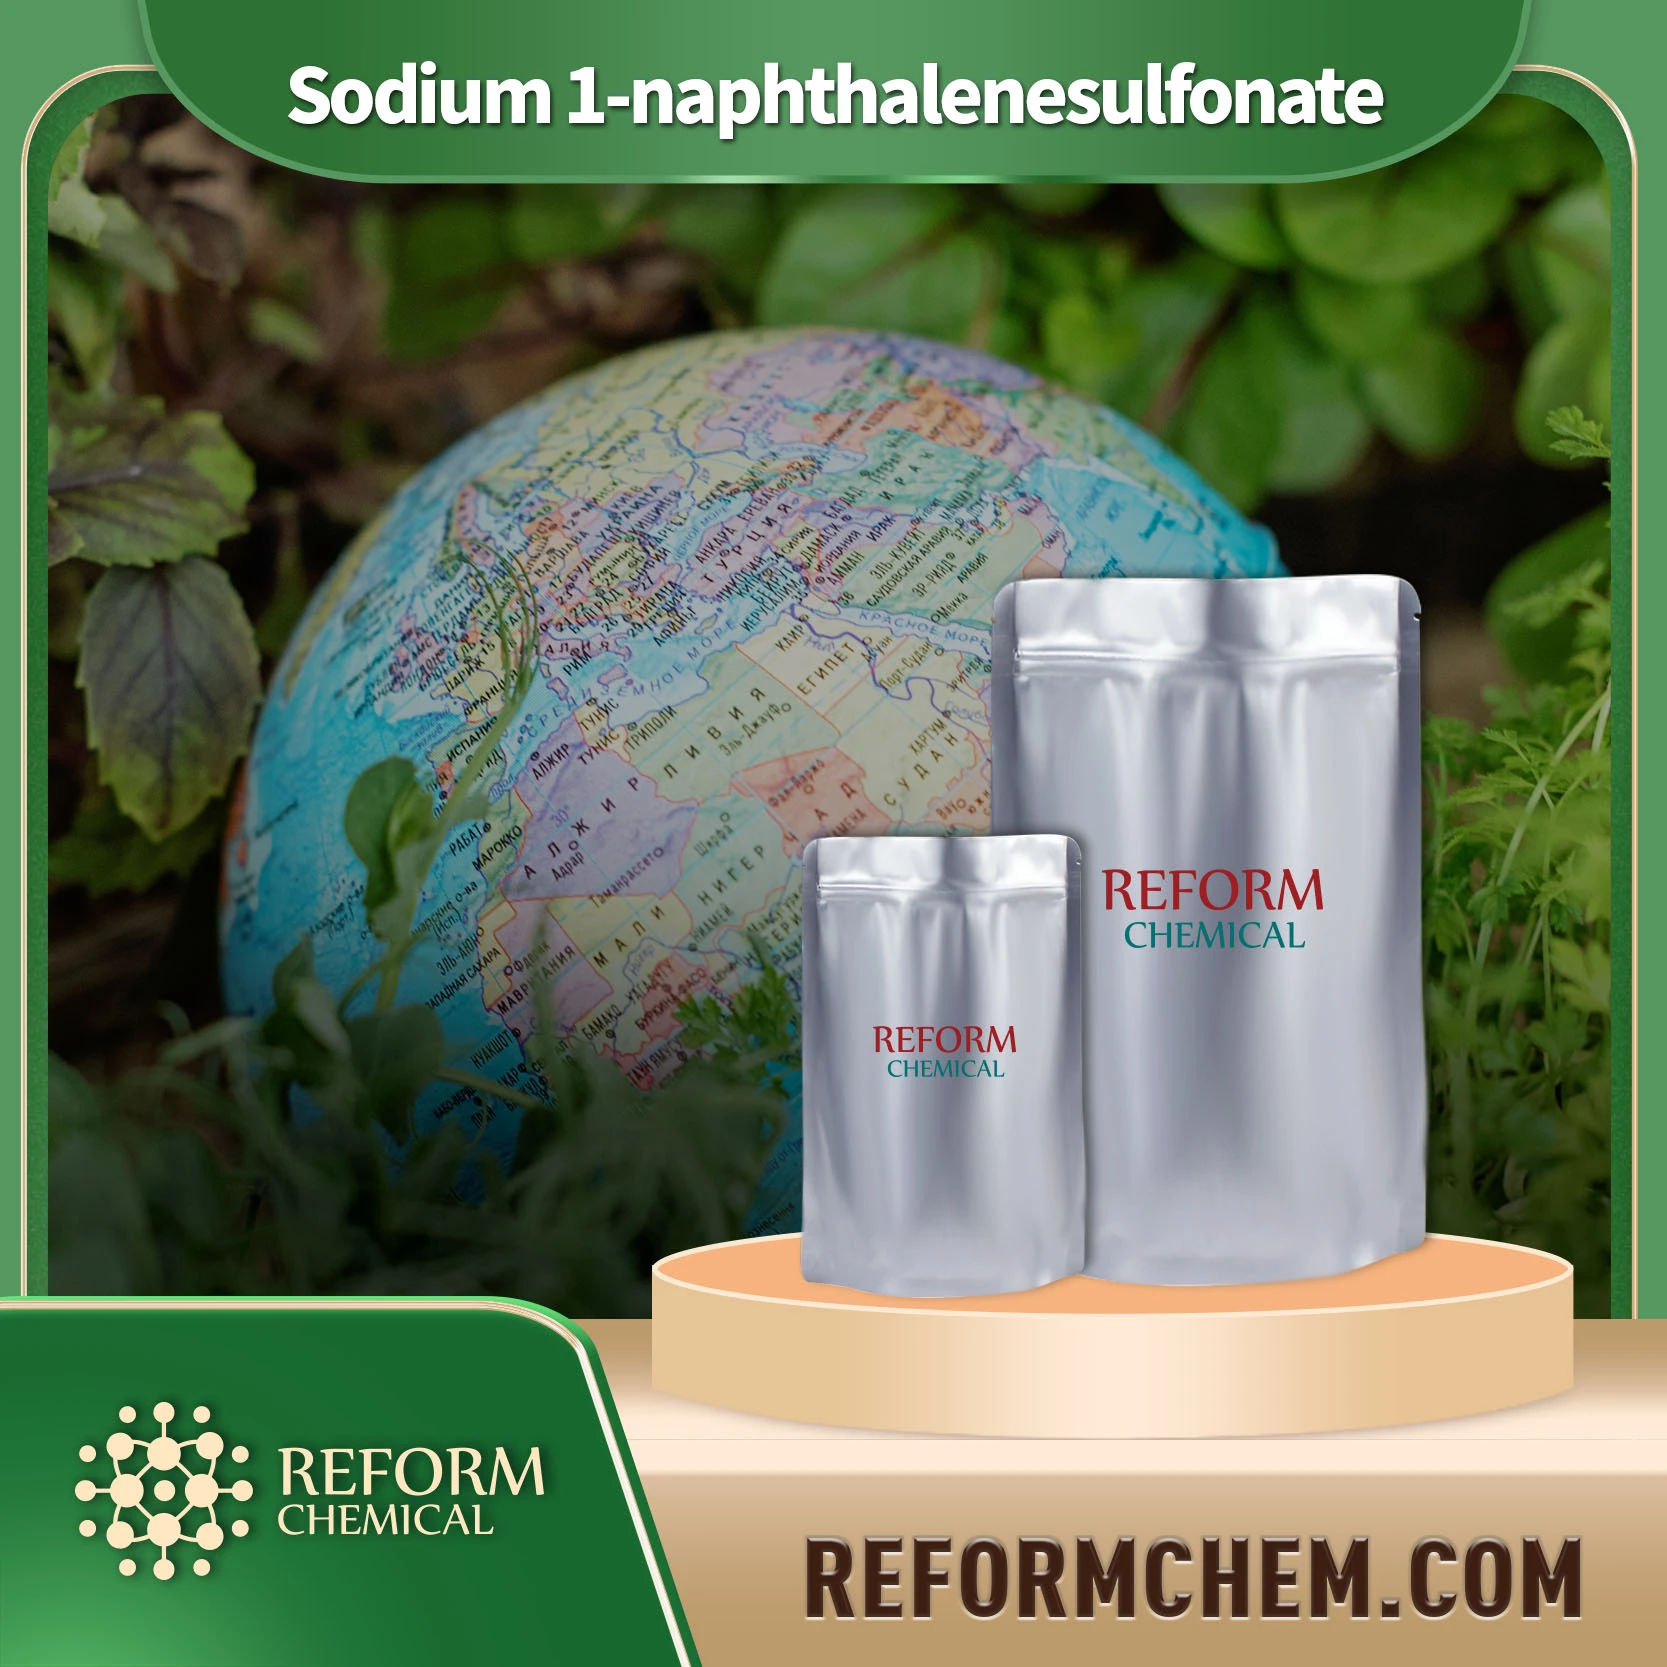 Sodium 1-naphthalenesulfonate